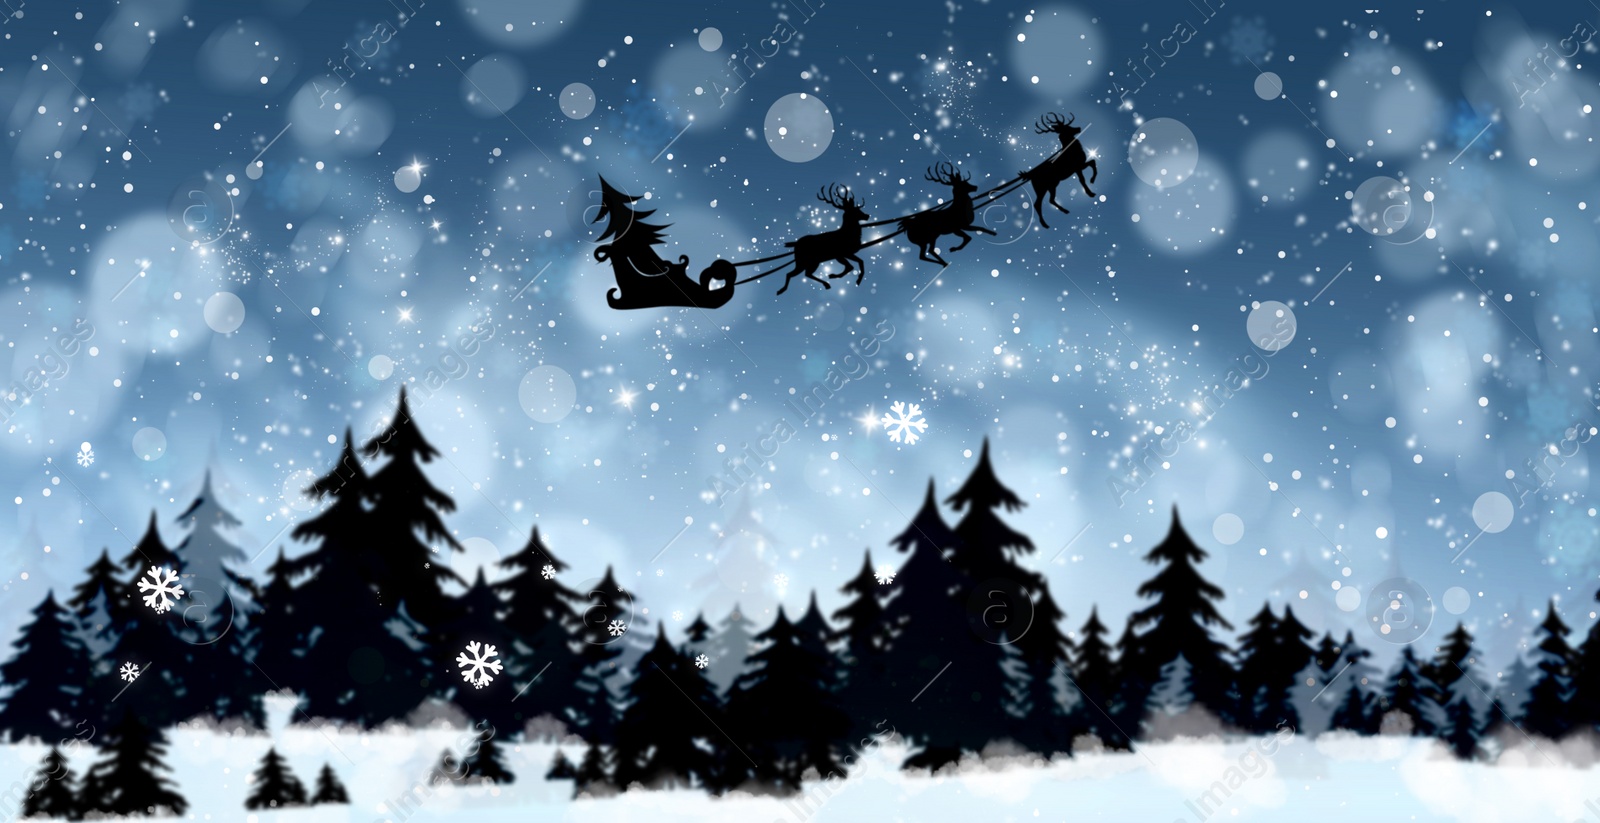 Image of Magic Christmas eve. Reindeers pulling Santa's sleigh in sky on snowy night, banner design